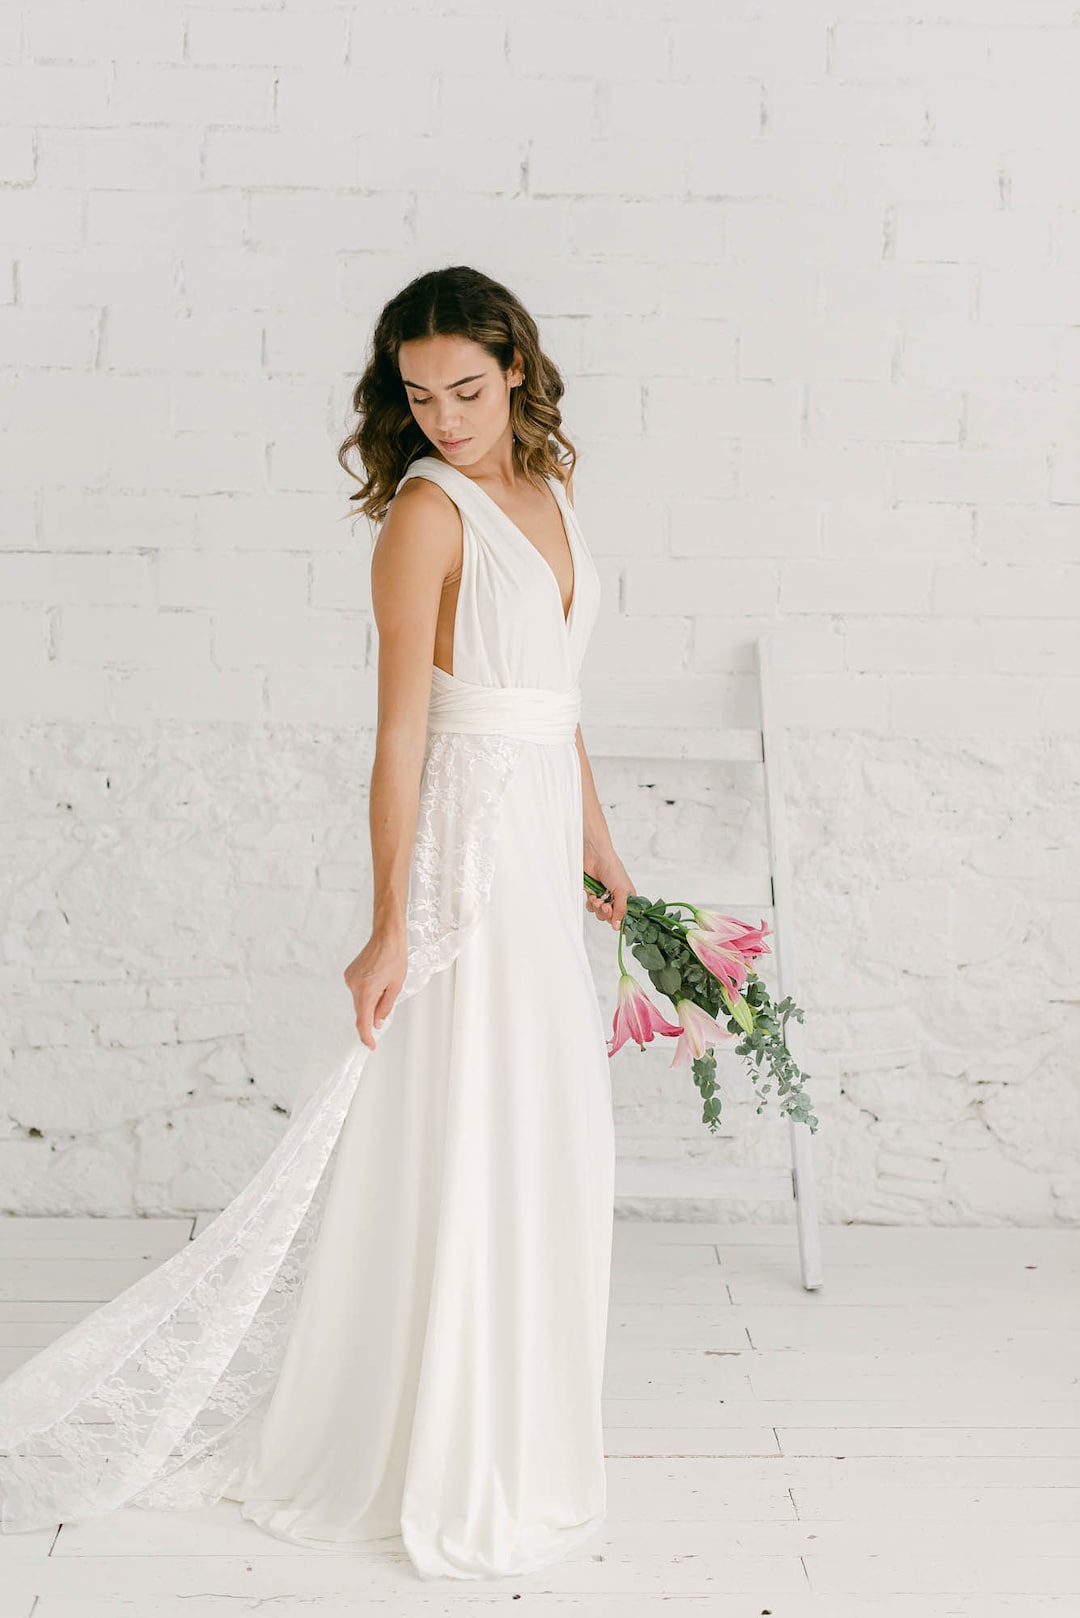 Lace Detachable Train for Wedding Dress, Romantic Bridal Overskirt